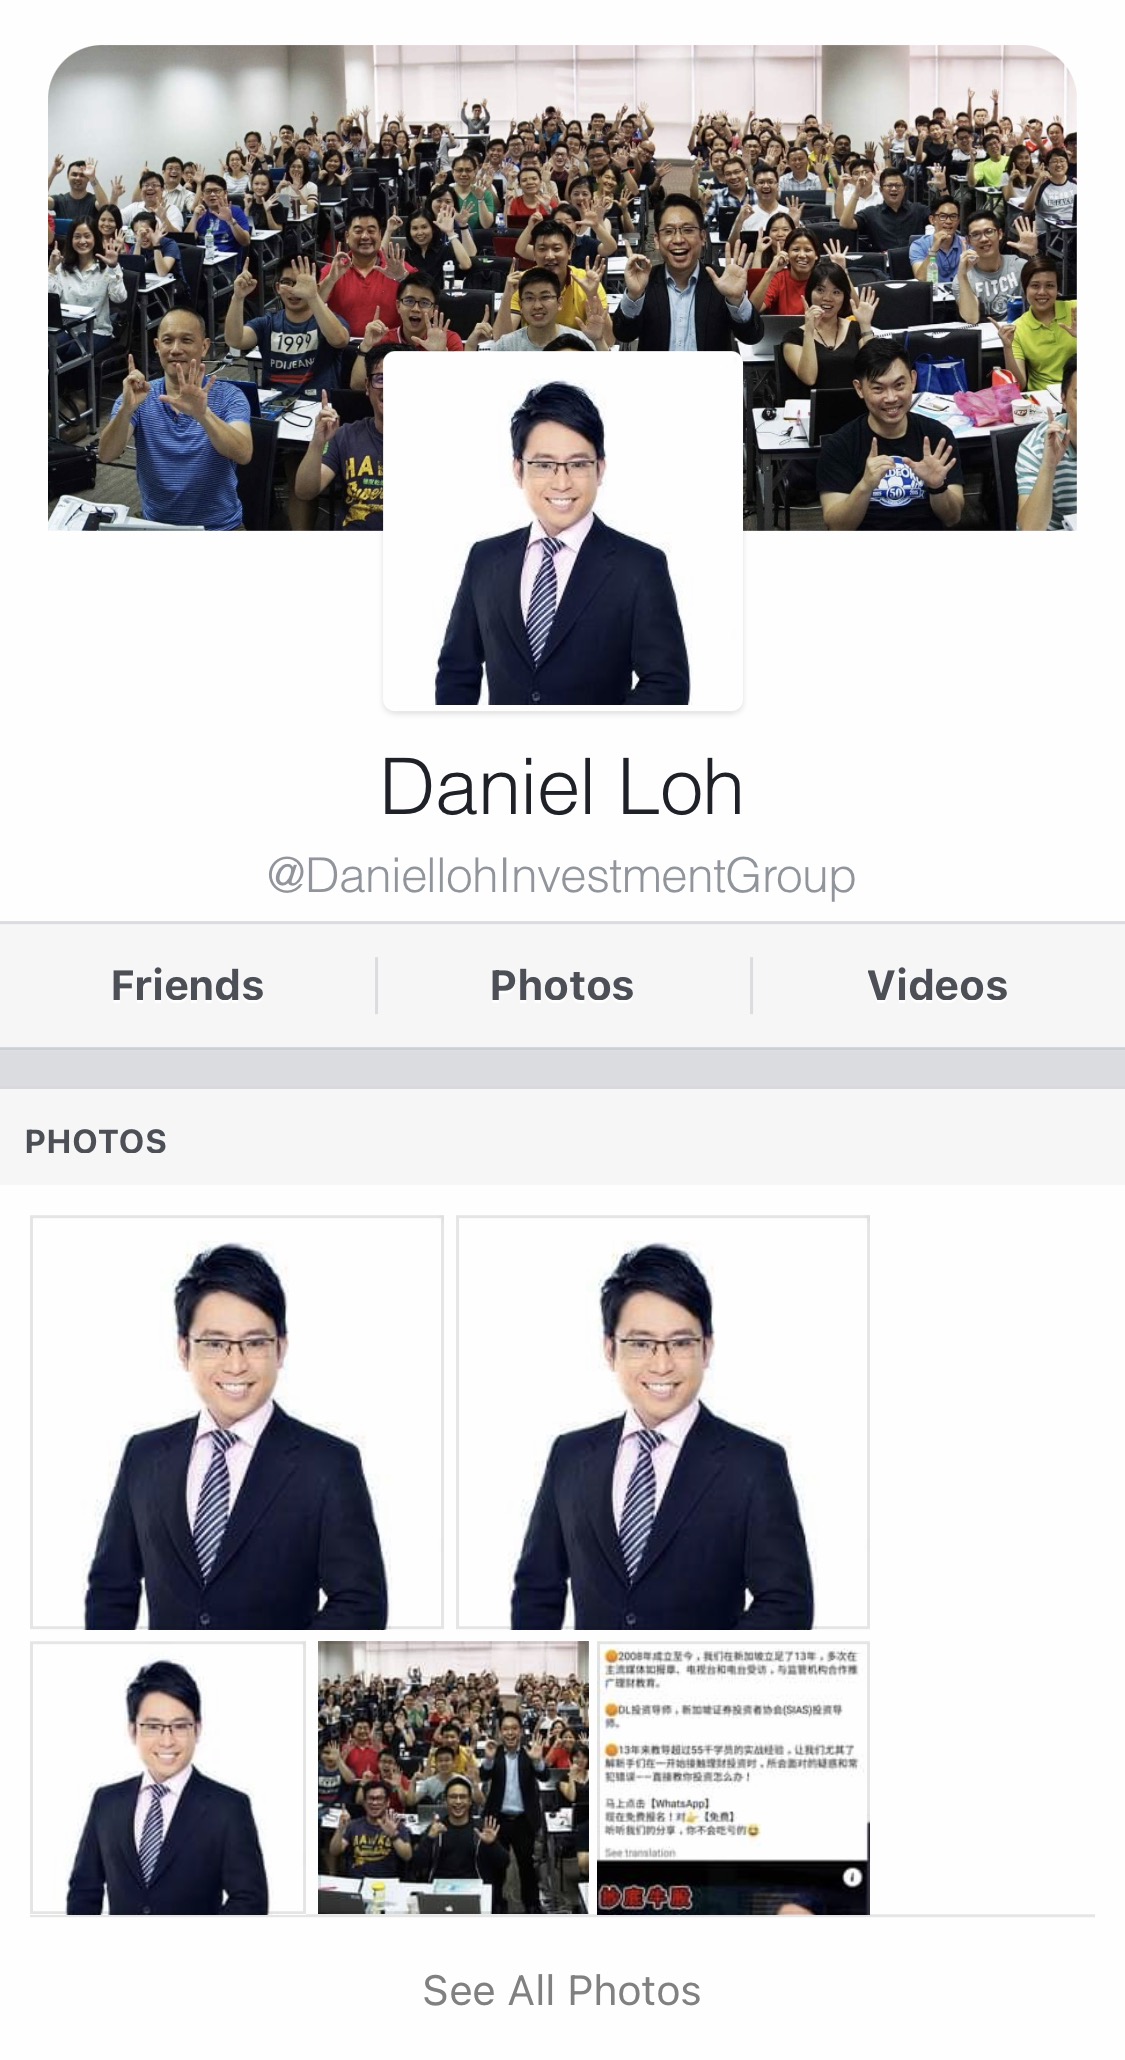 daniel loh's facebook